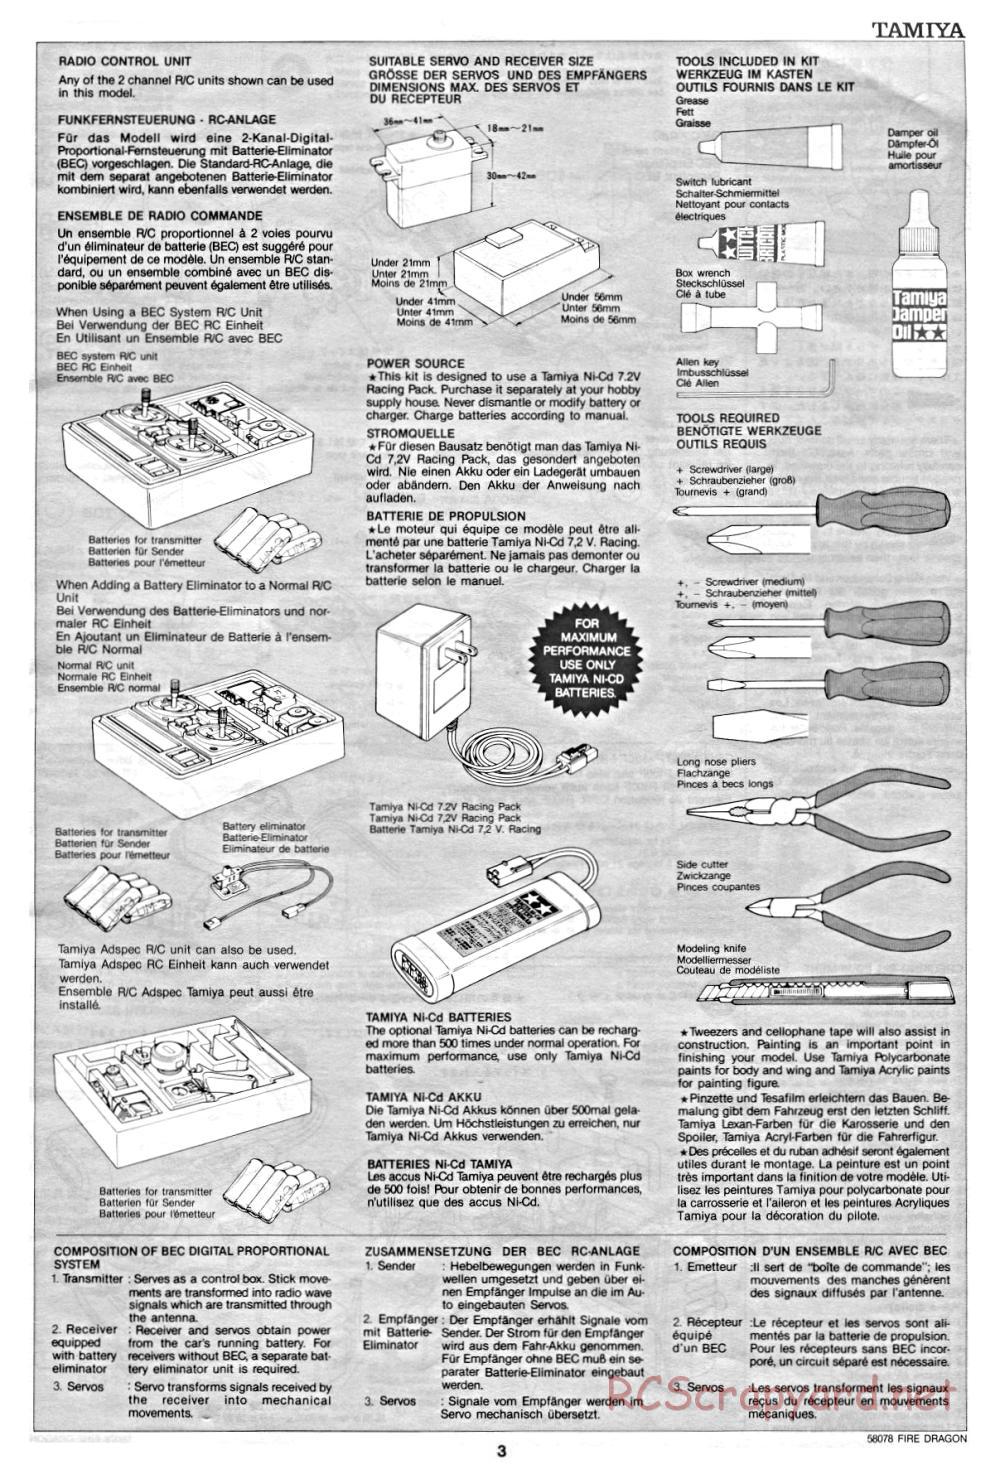 Tamiya - Fire Dragon - 58078 - Manual - Page 3